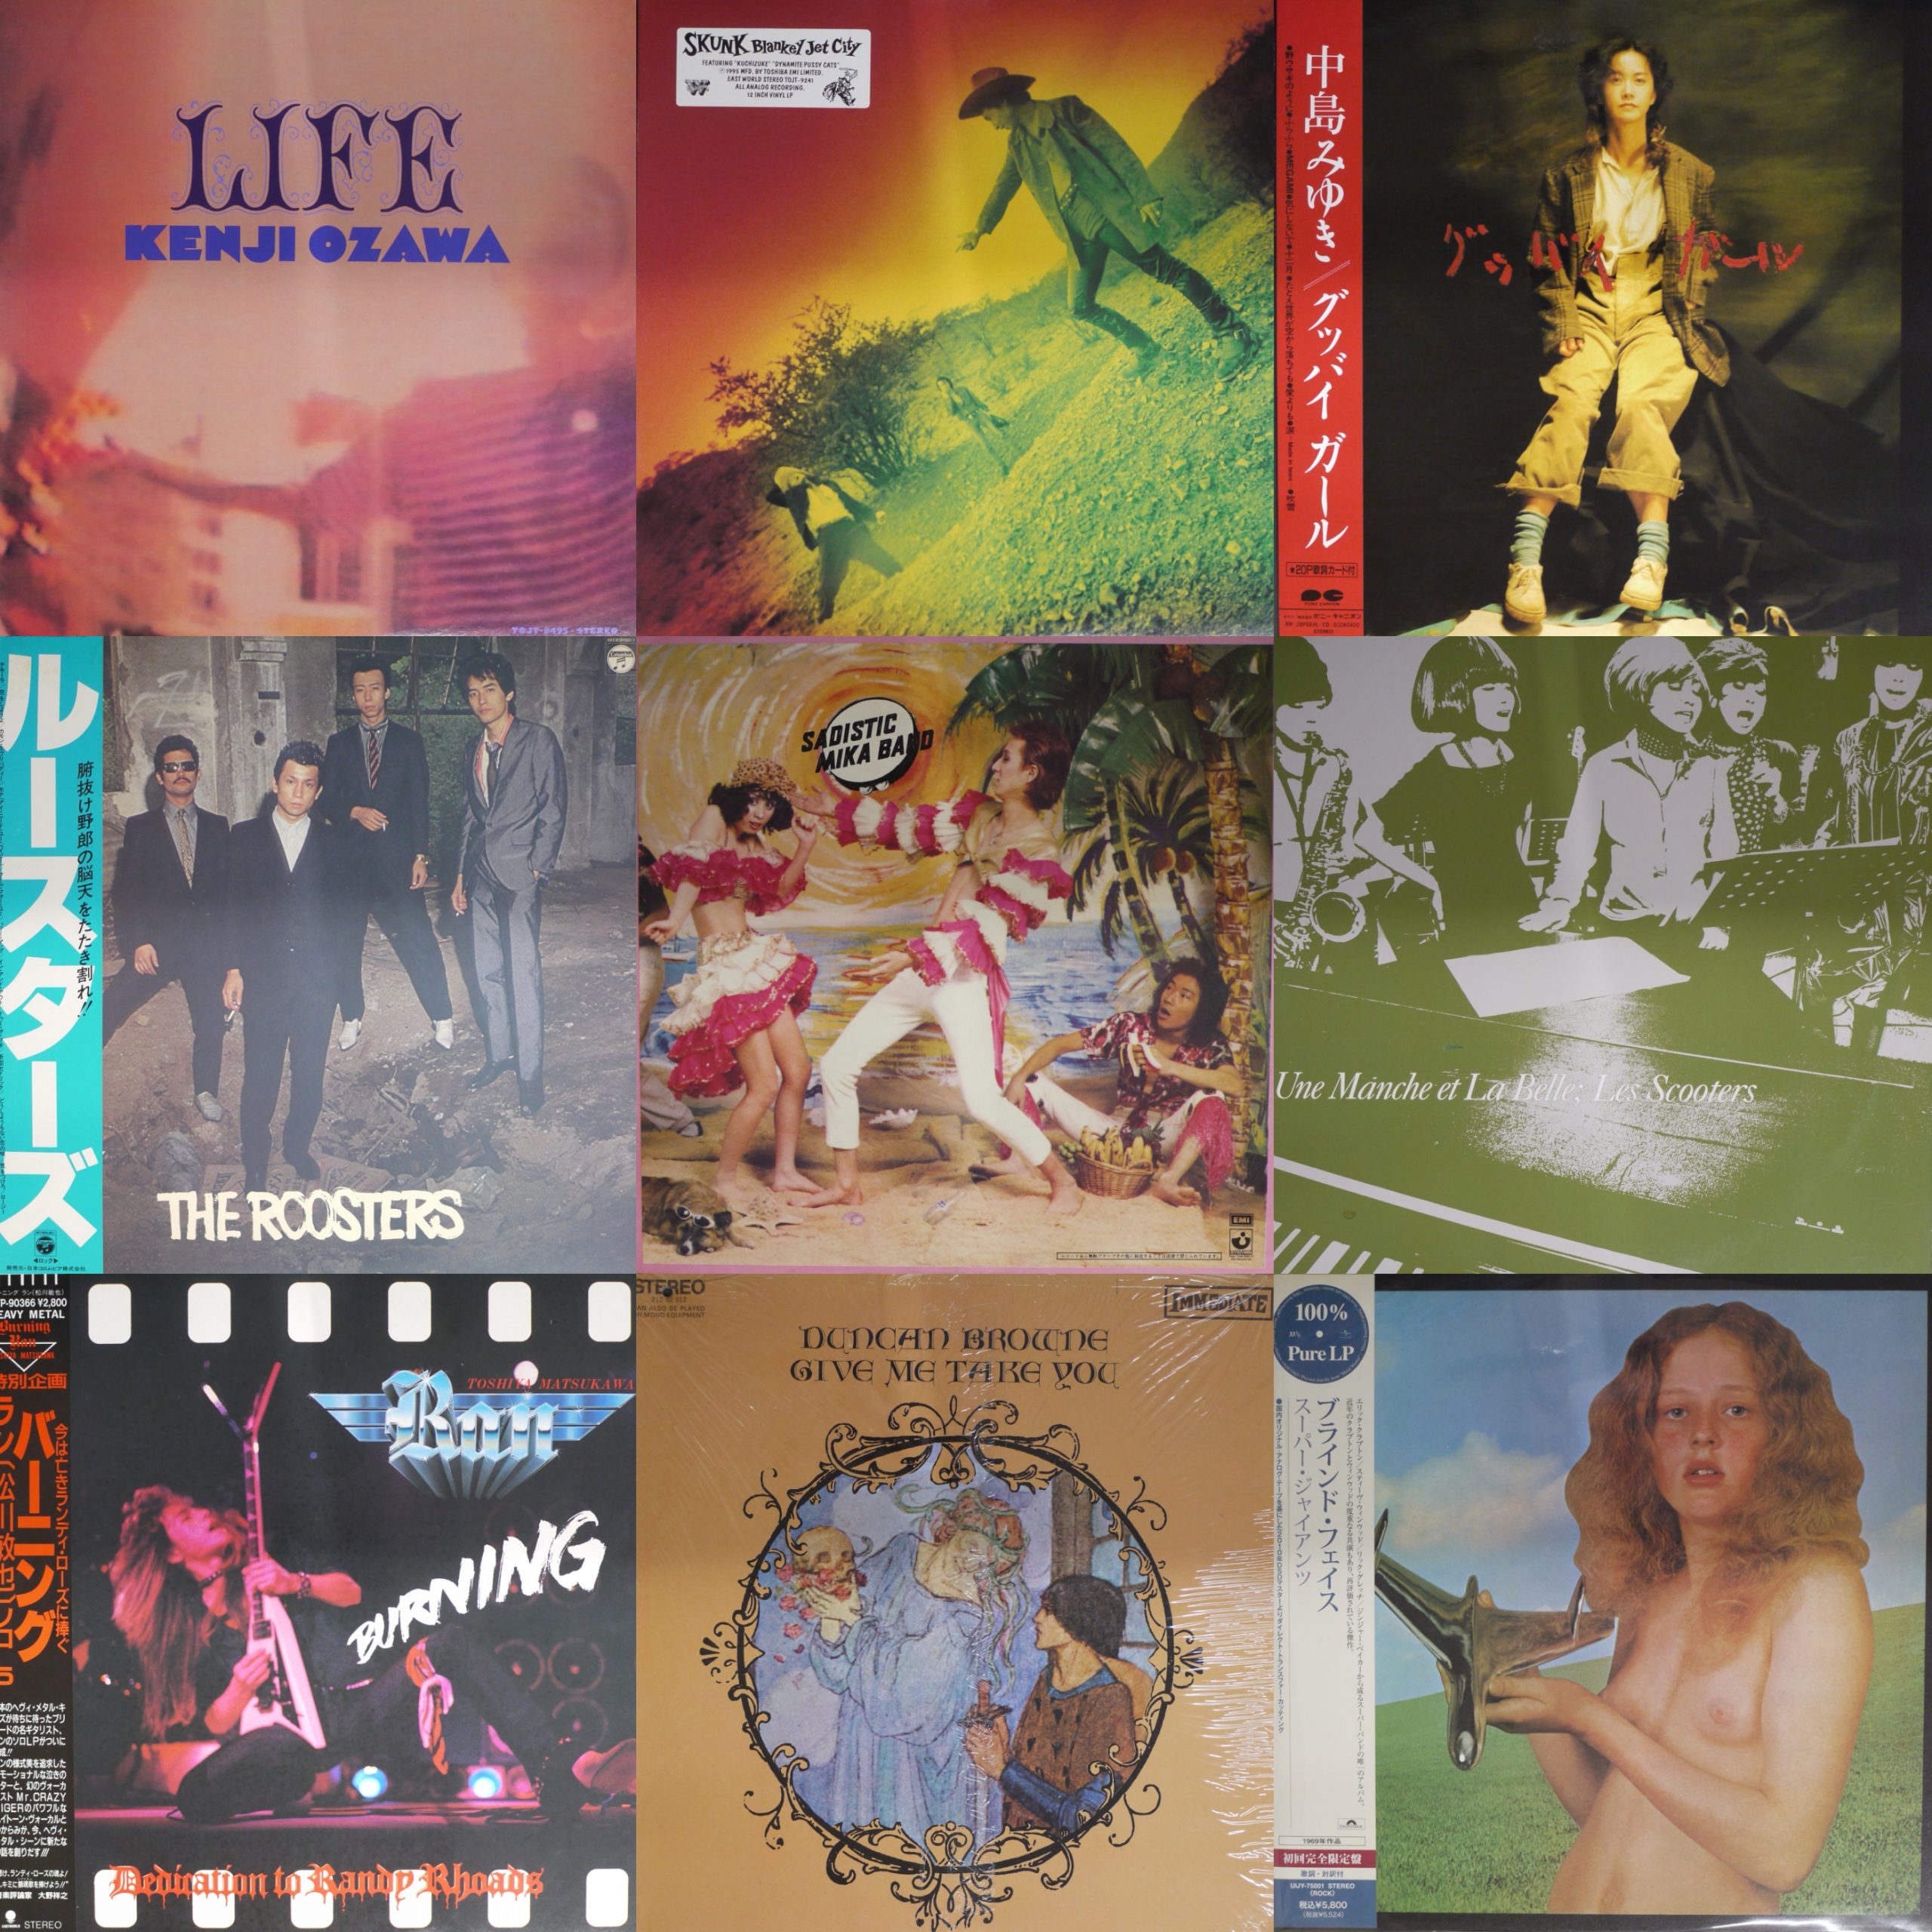 2023/05/09(TUE) OLD ROCK & 和モノ LP SALE！ – General Record Store